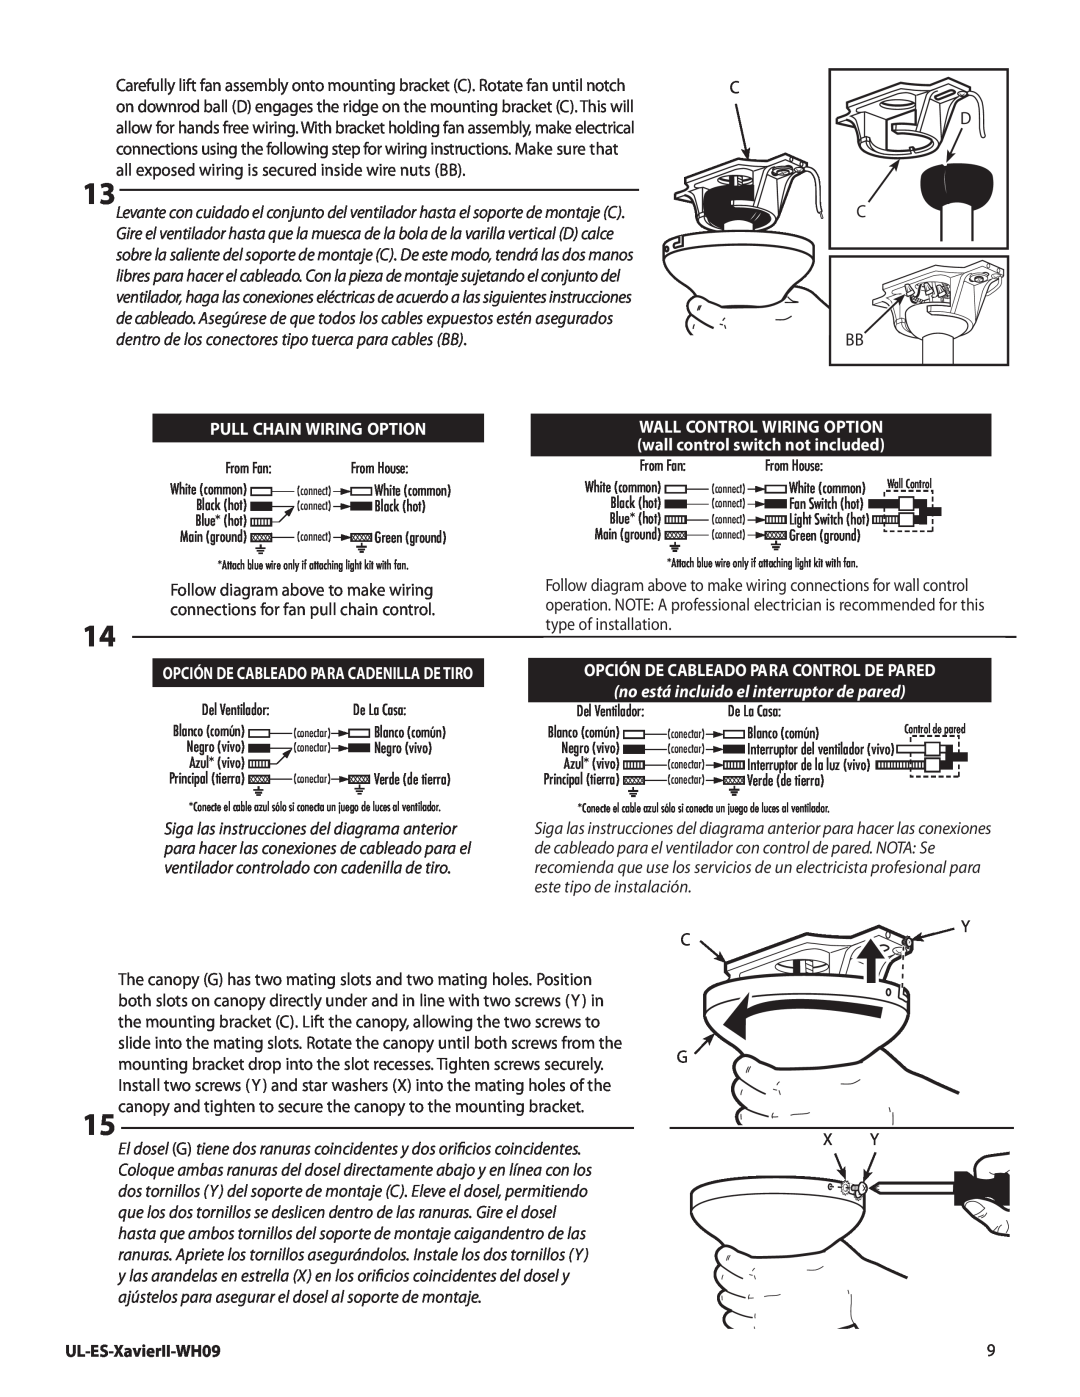 Westinghouse manual dentro de los conectores tipo tuerca para cables BB, Pull Chain Wiring Option, UL-ES-XavierII-WH09 